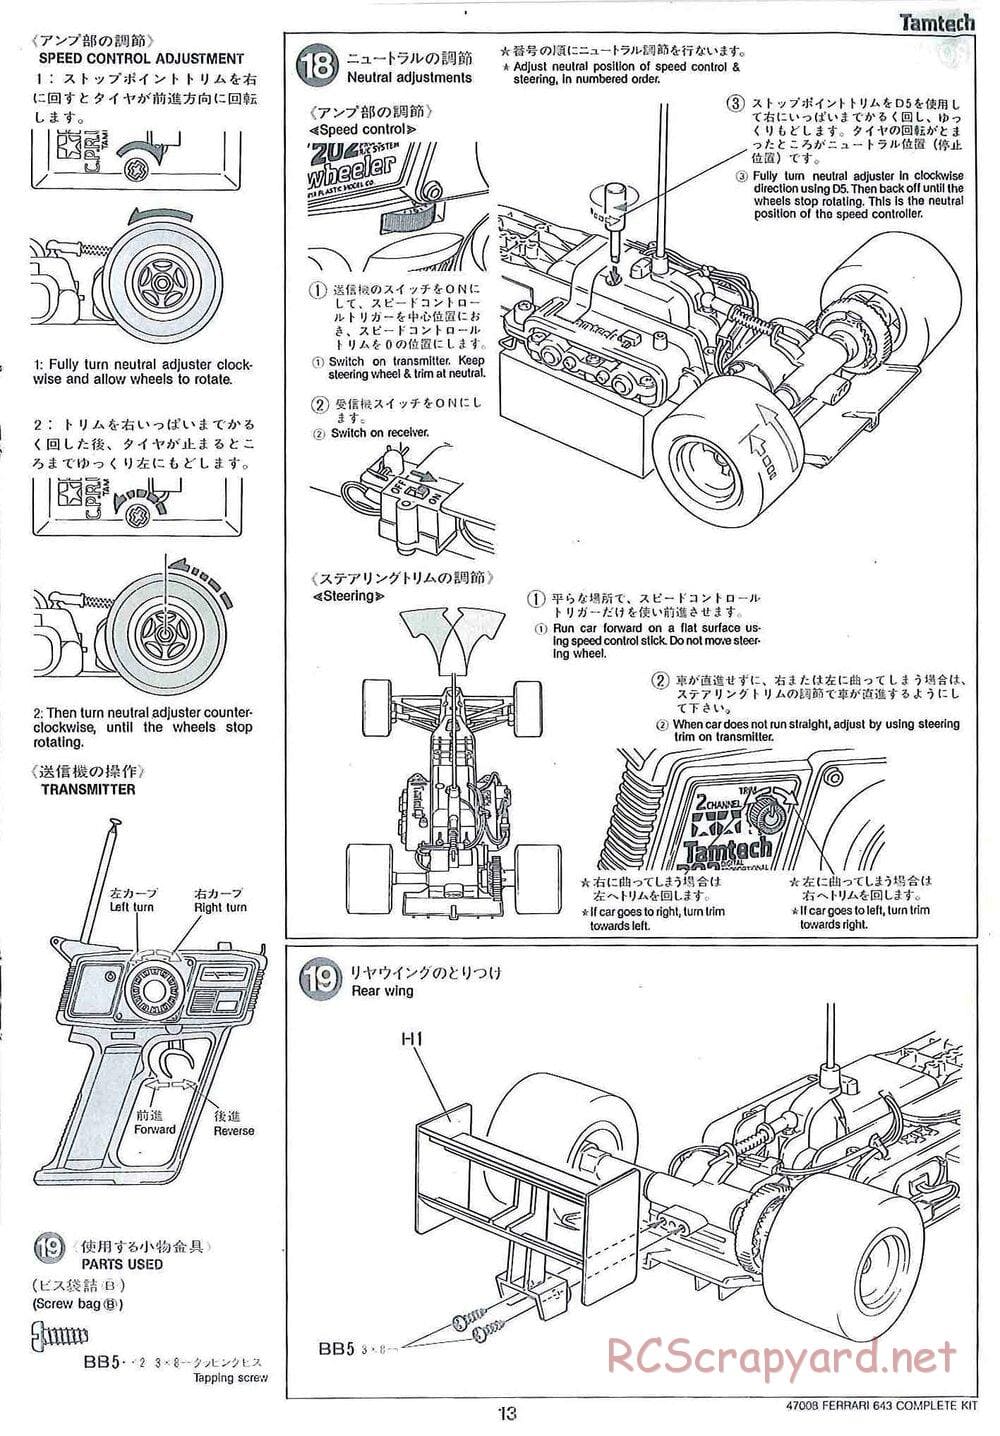 Tamiya - Tamtech - Ferrari 643 Chassis - Manual - Page 13